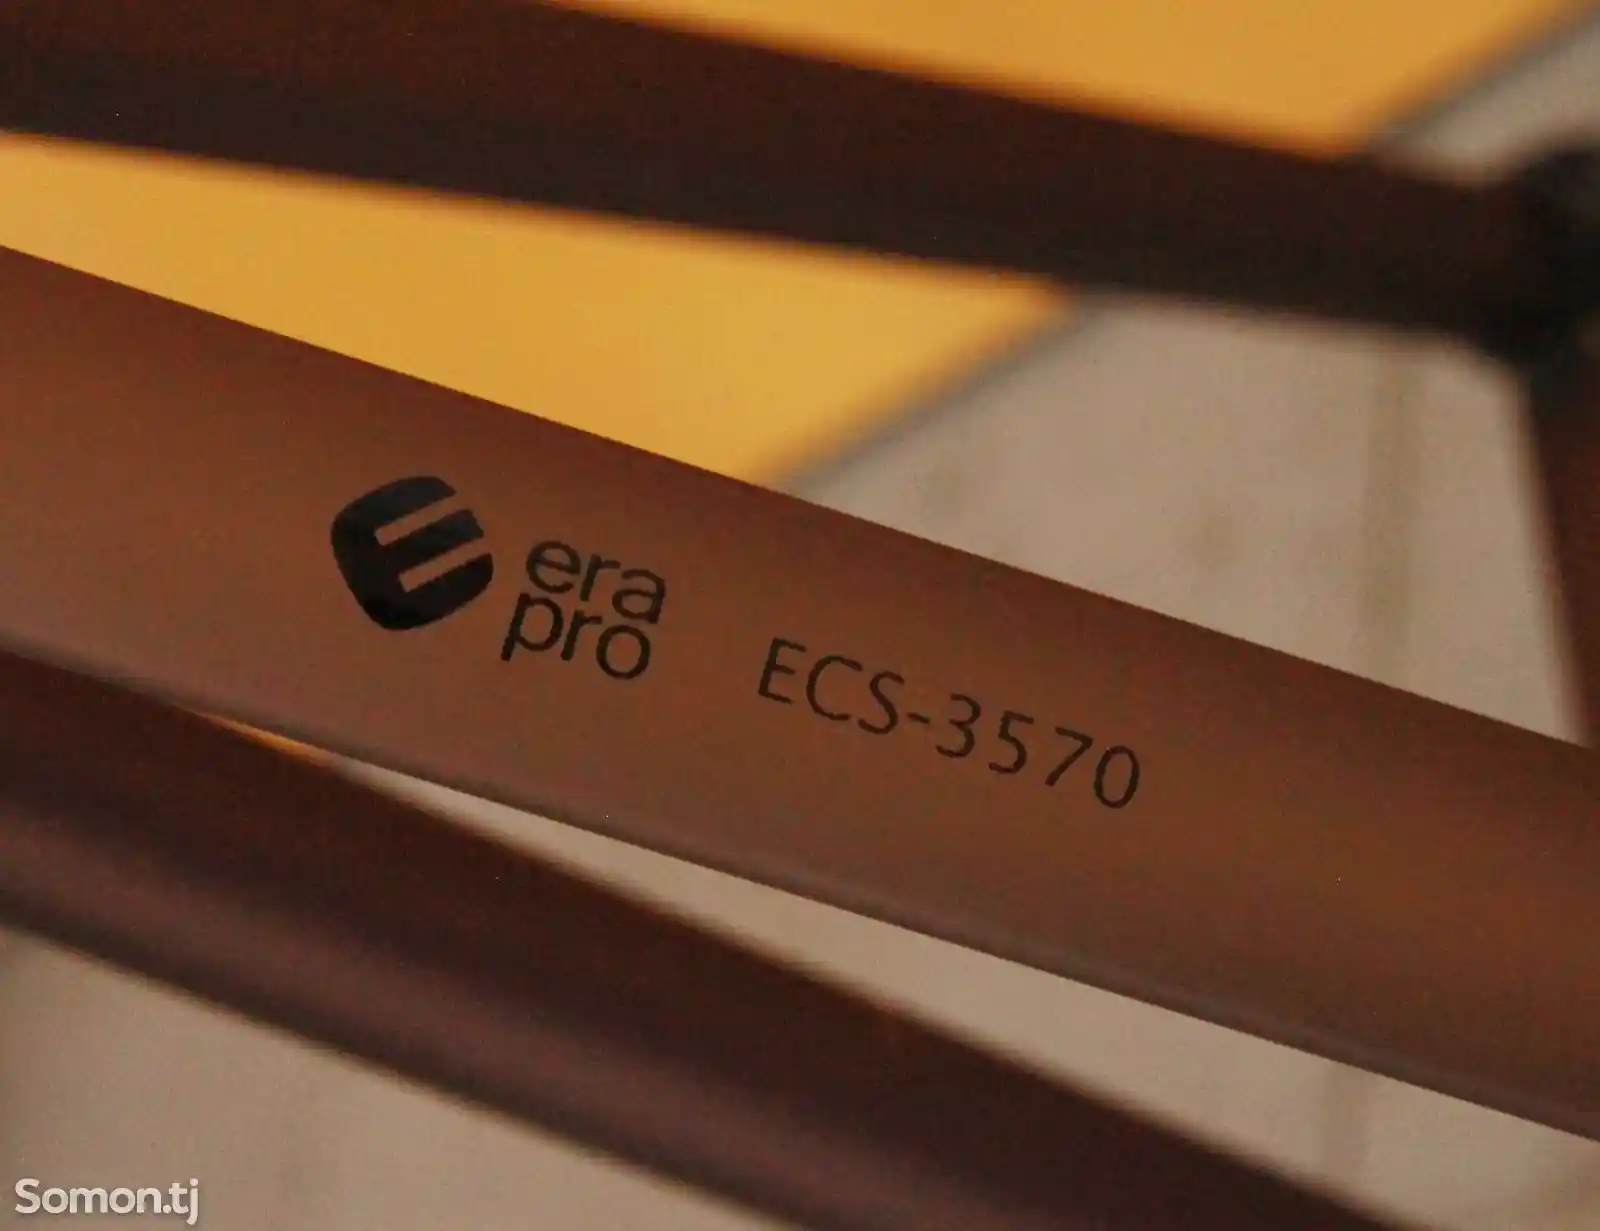 Штатив Era Pro ECS-3570-3